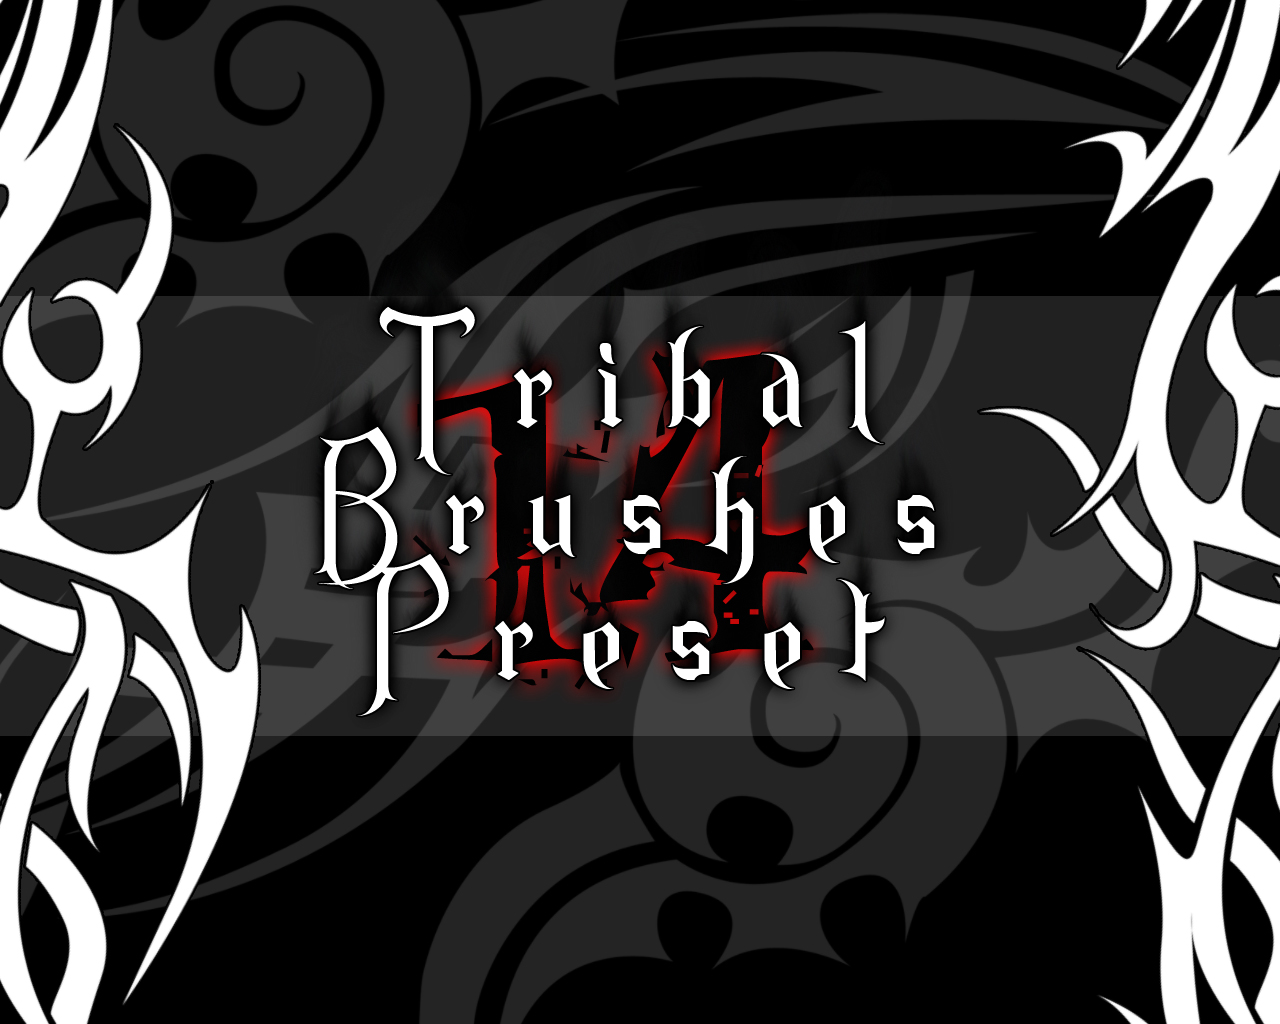 Photoshop Free tribals Brushes